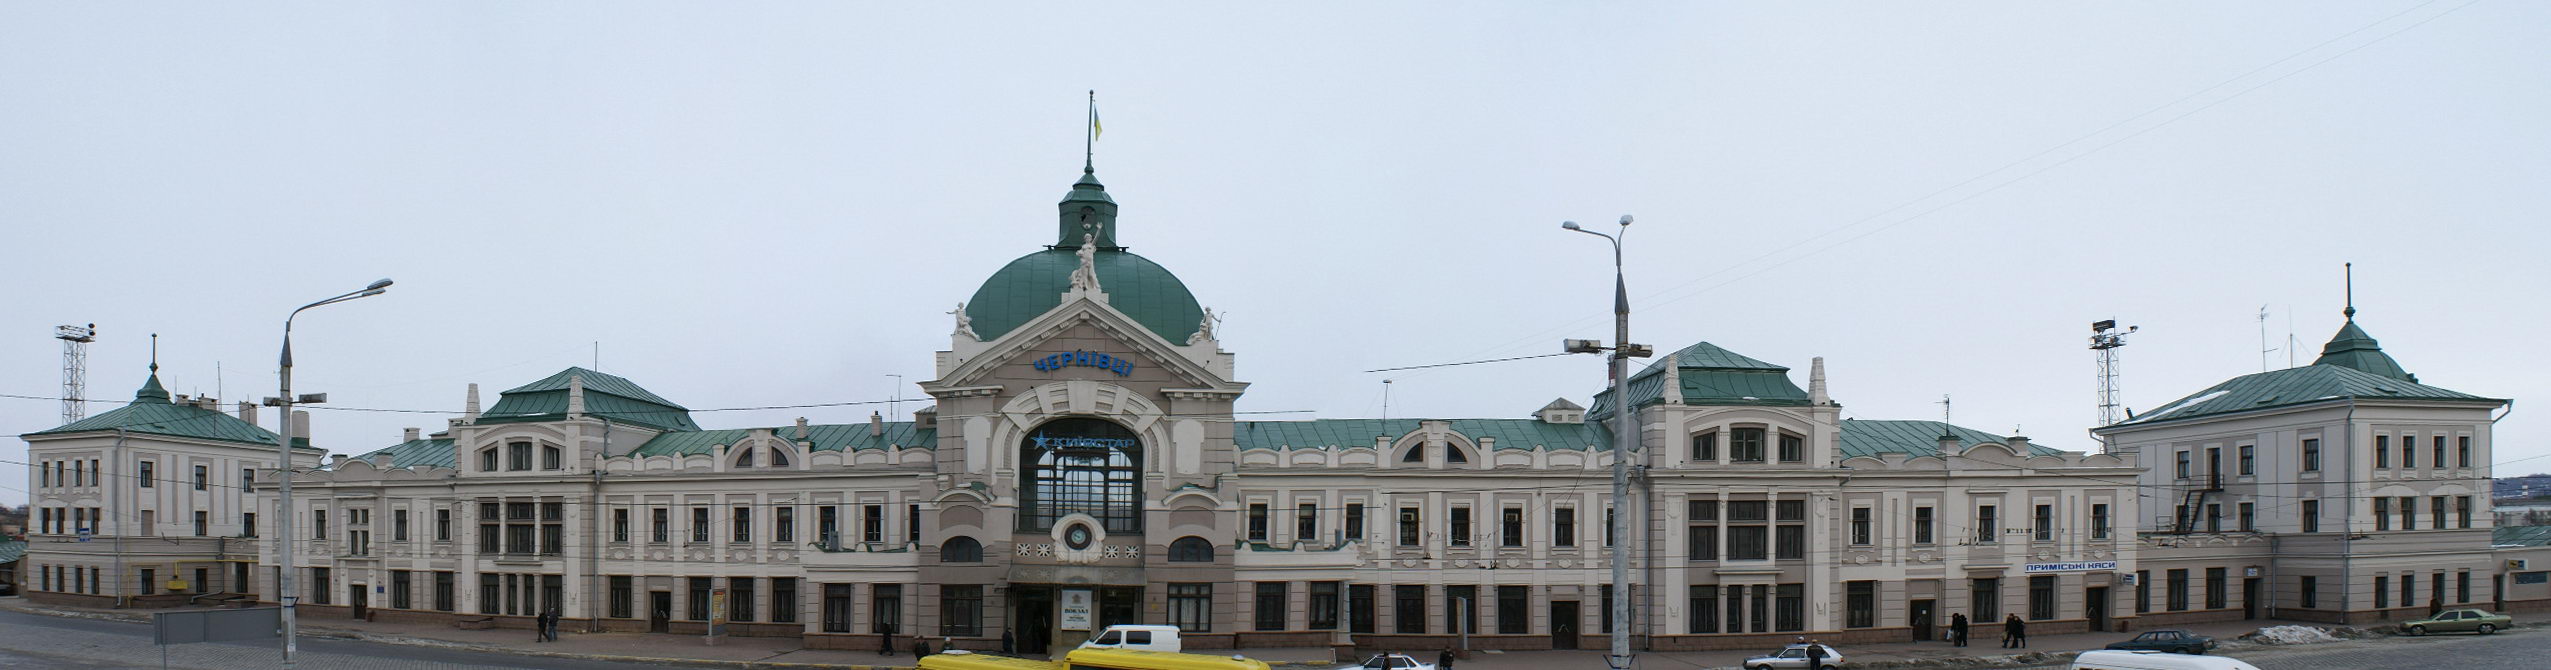 Фото Черновцы Вокзал панорама